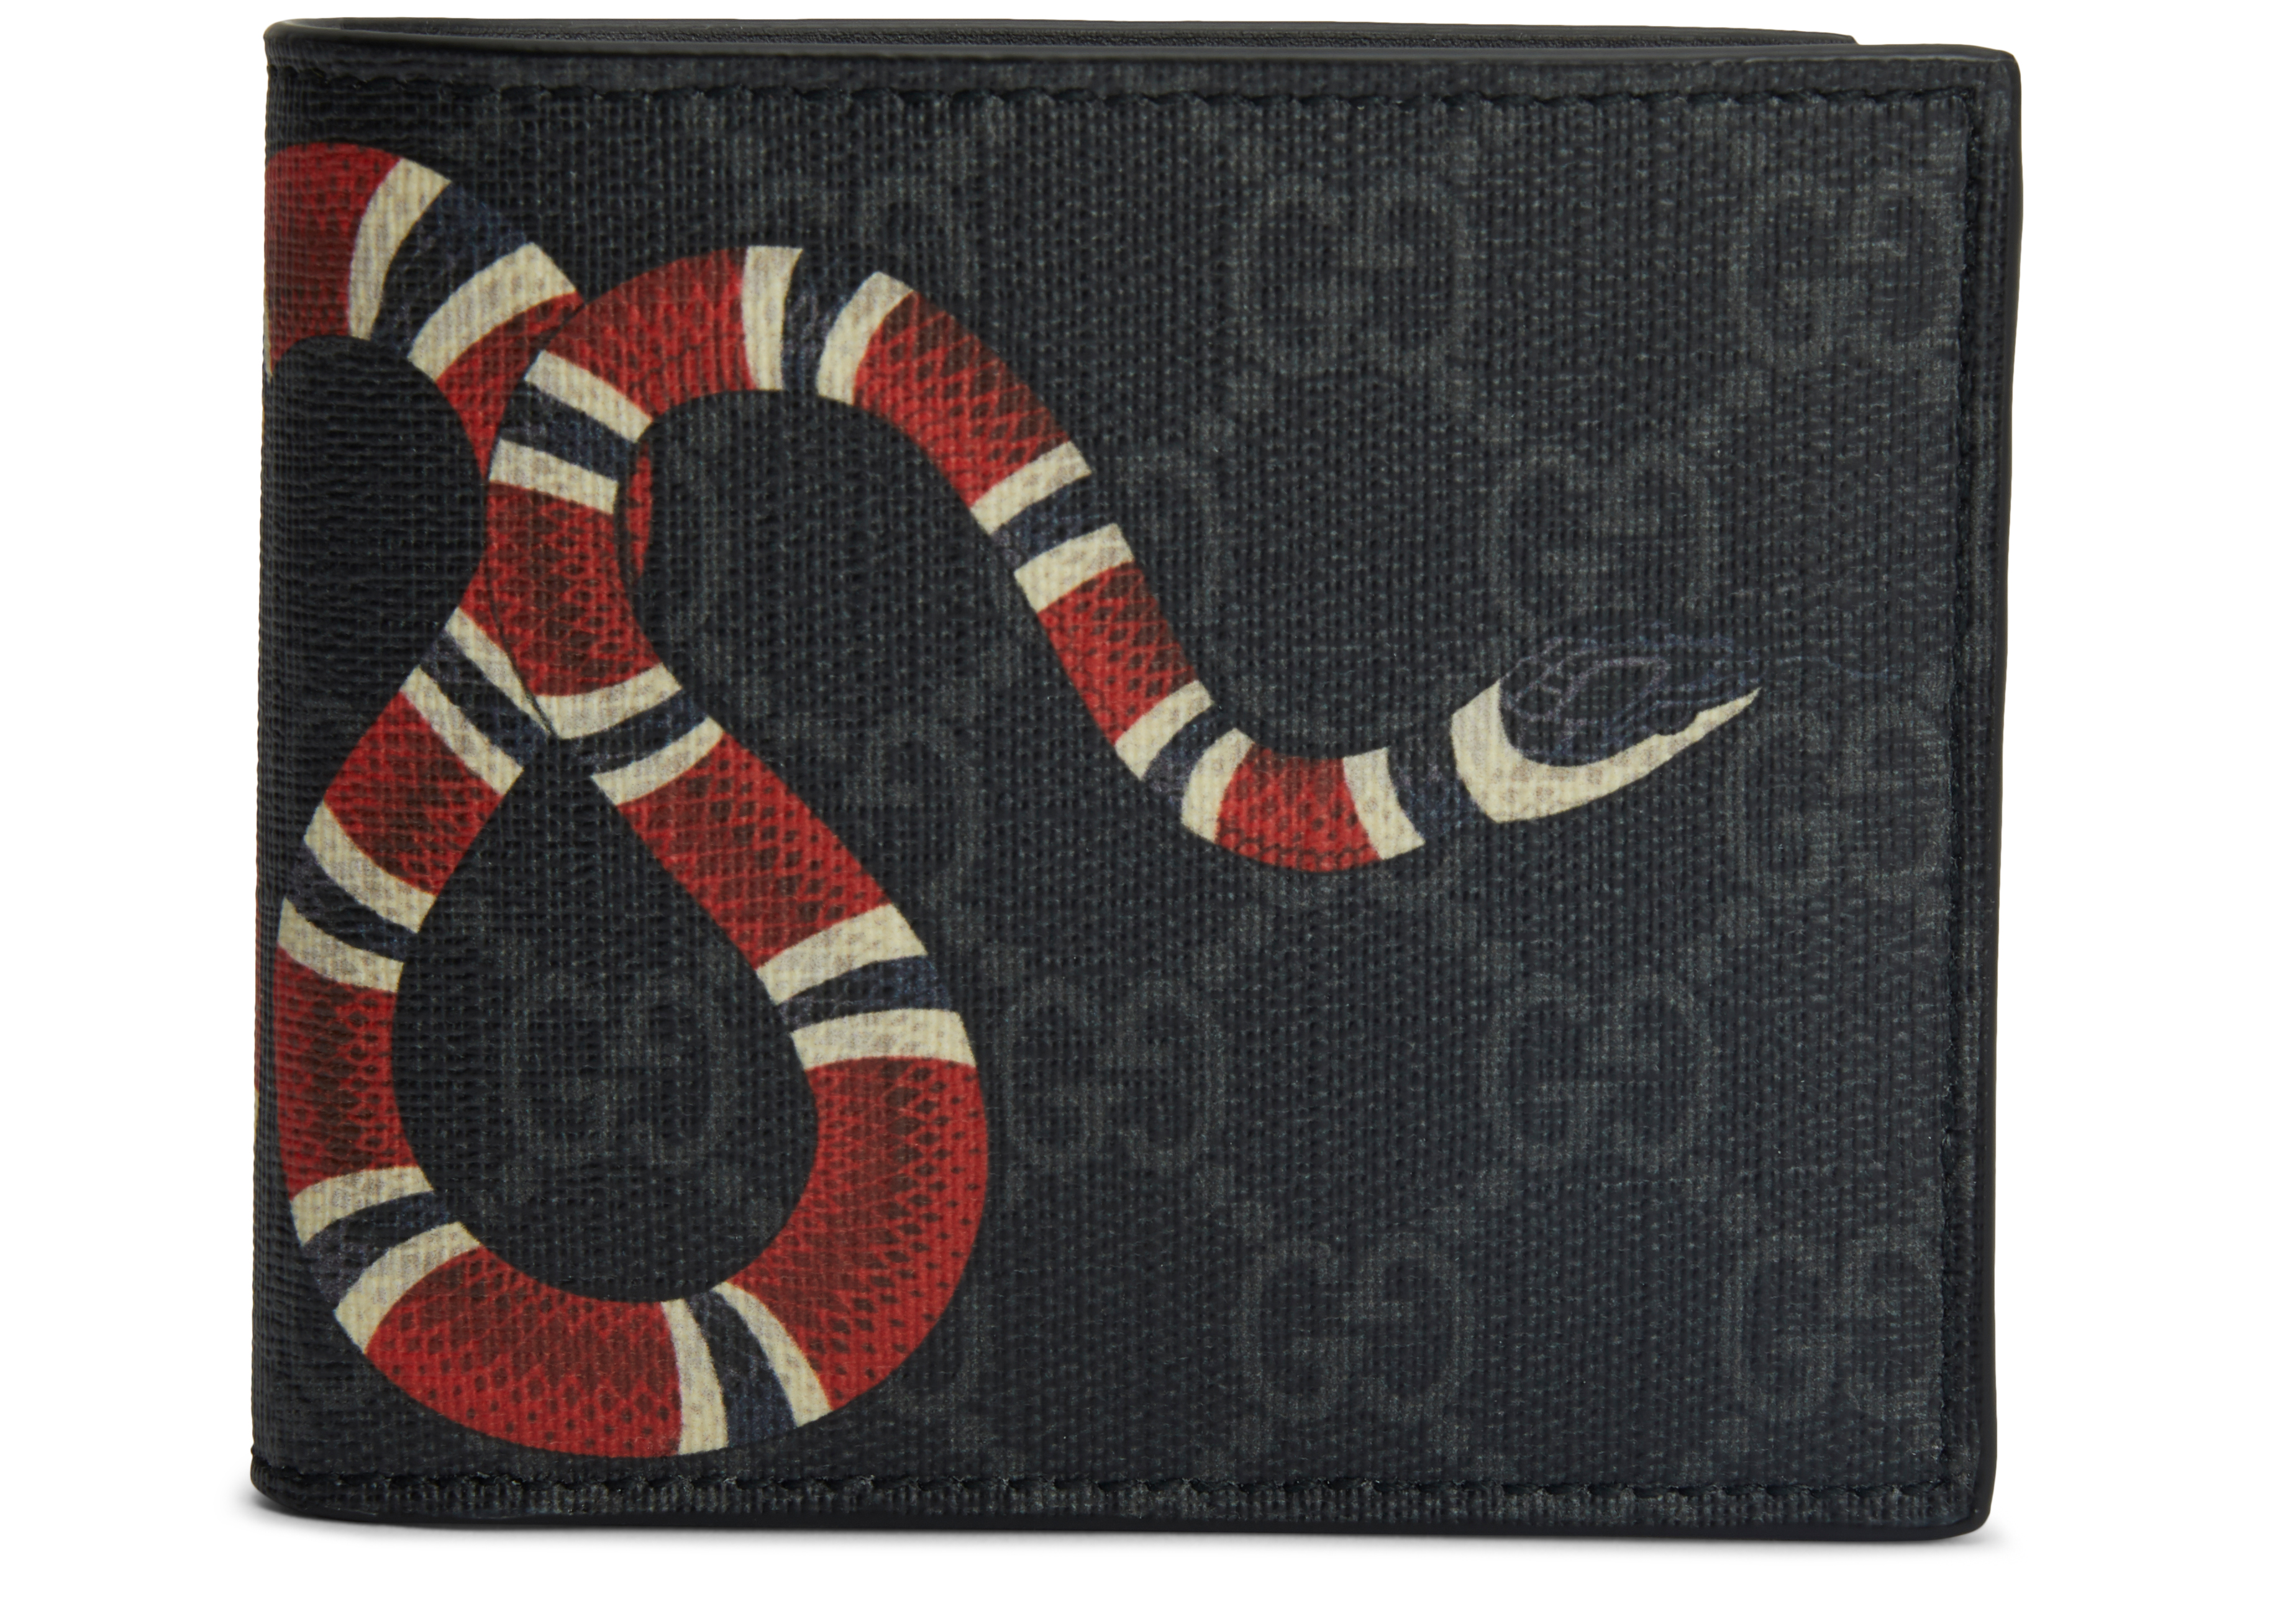 snake gucci wallet